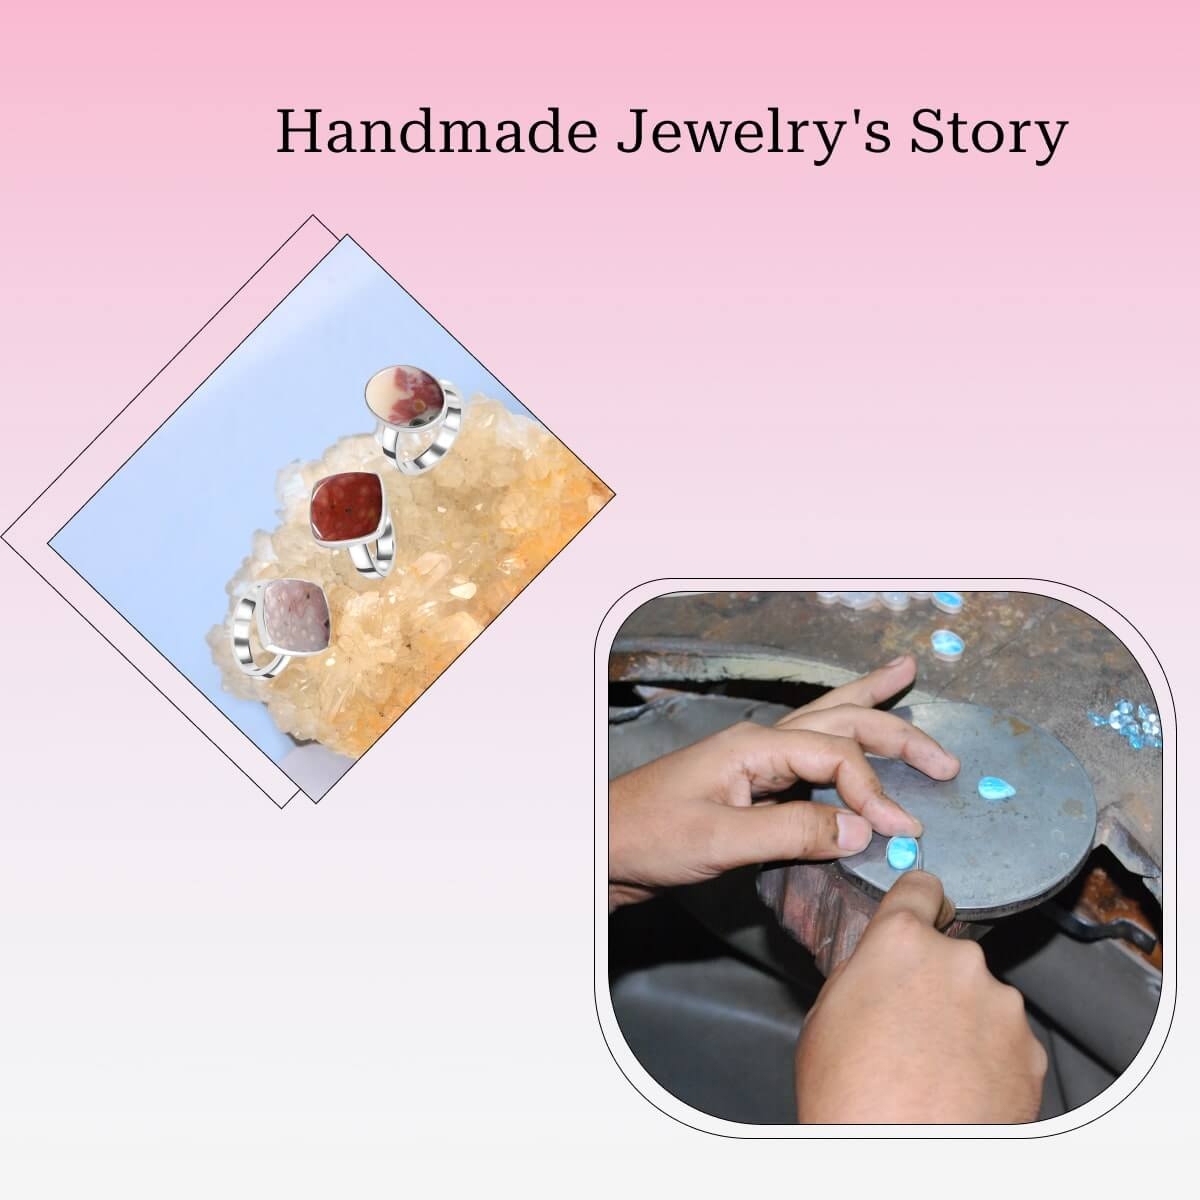 History of Handmade Jewelry